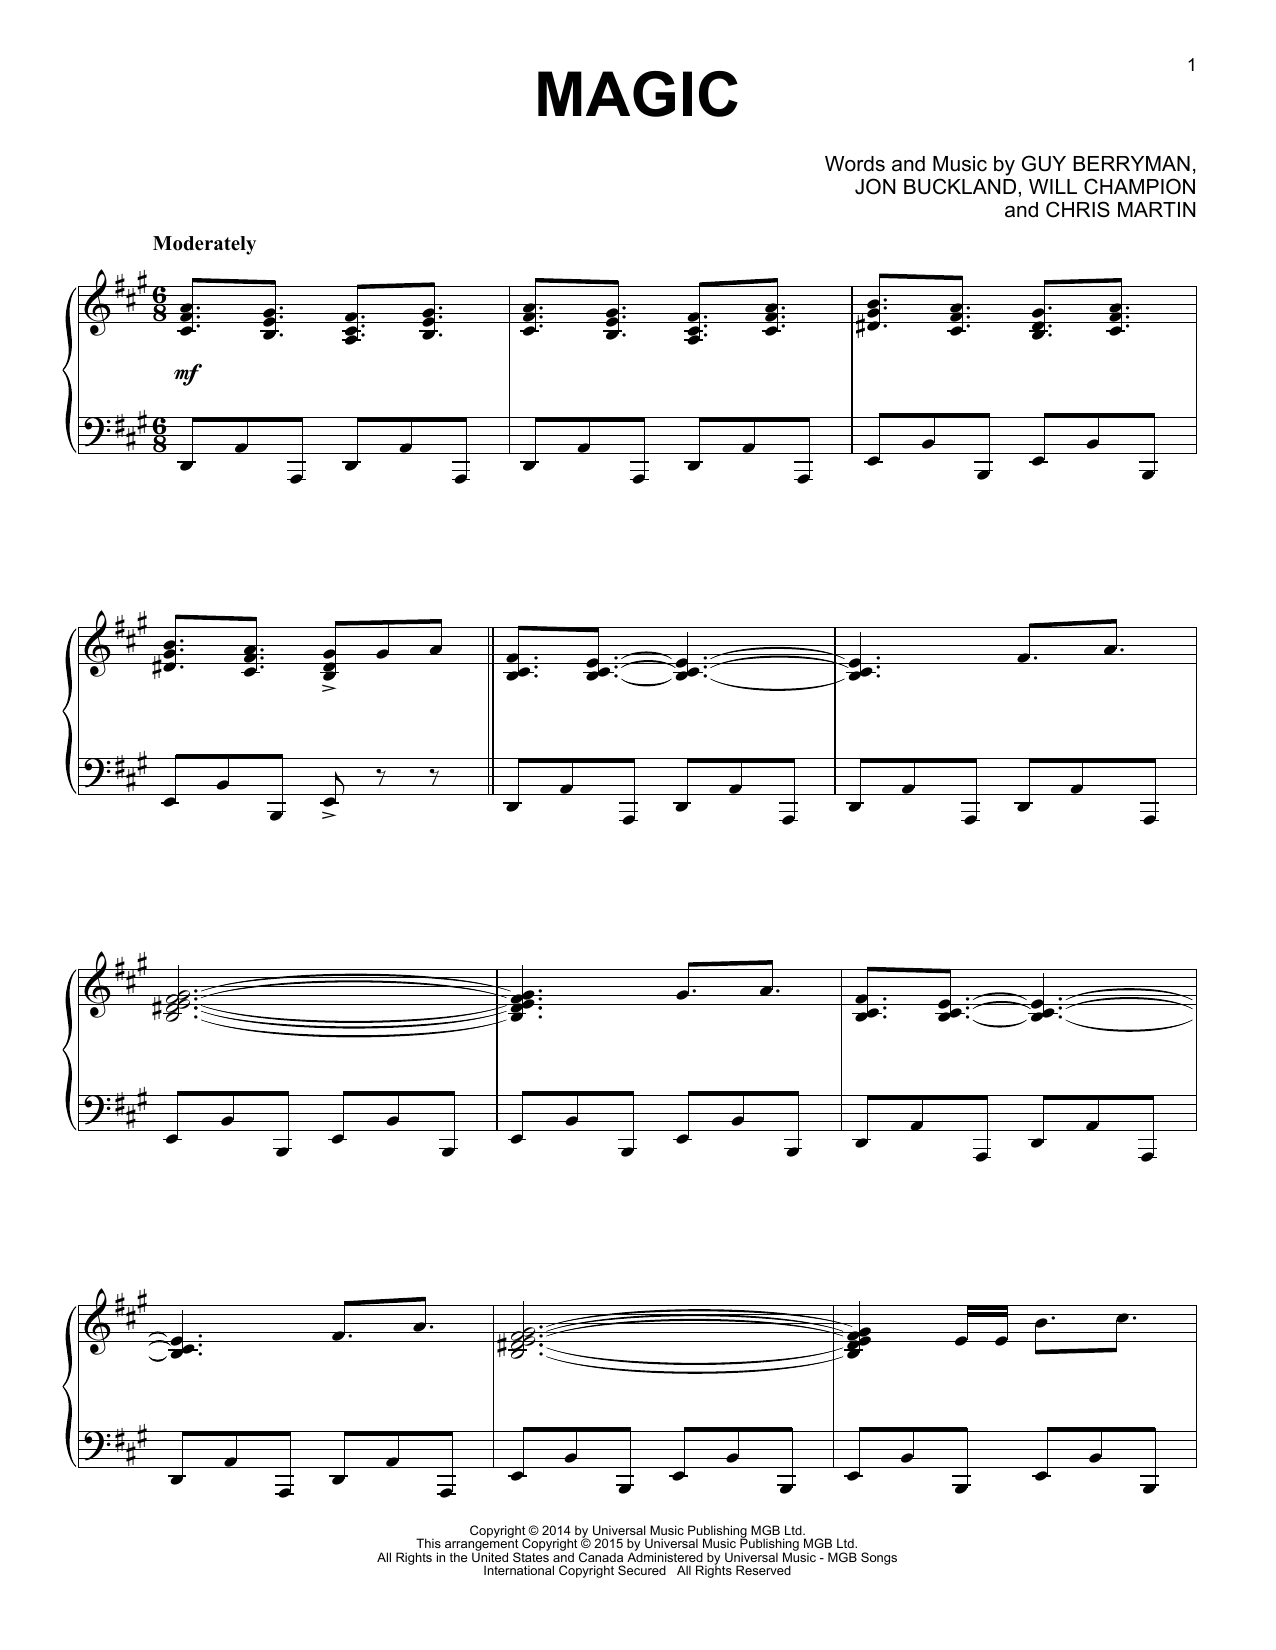 Coldplay "Magic" Sheet Music Notes, Chords | Piano Download Pop 161920 PDF